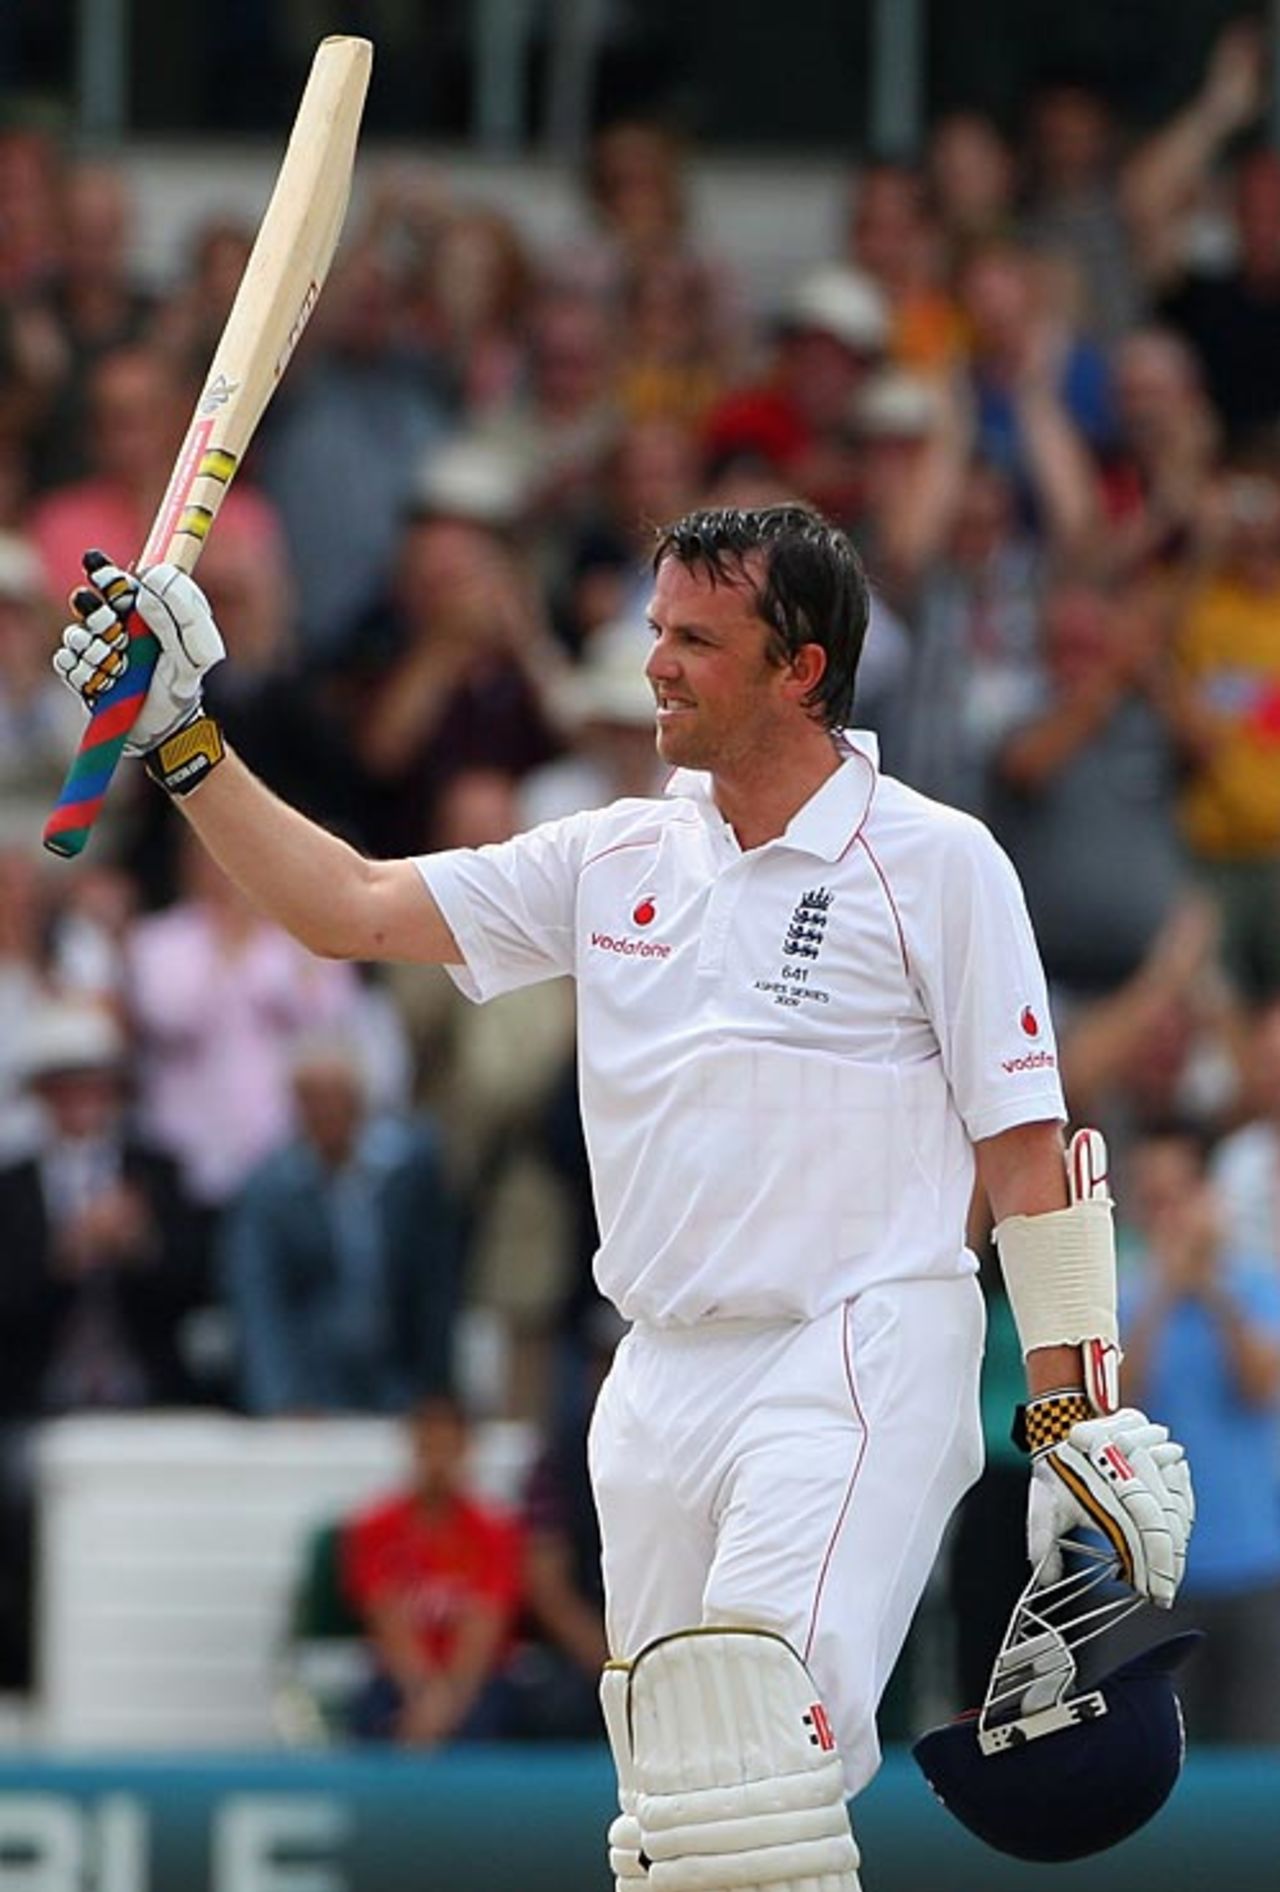 Graeme Swann reaches his fifty, England v Australia, 4th Test, Headingley, 3rd day, August 9, 2009